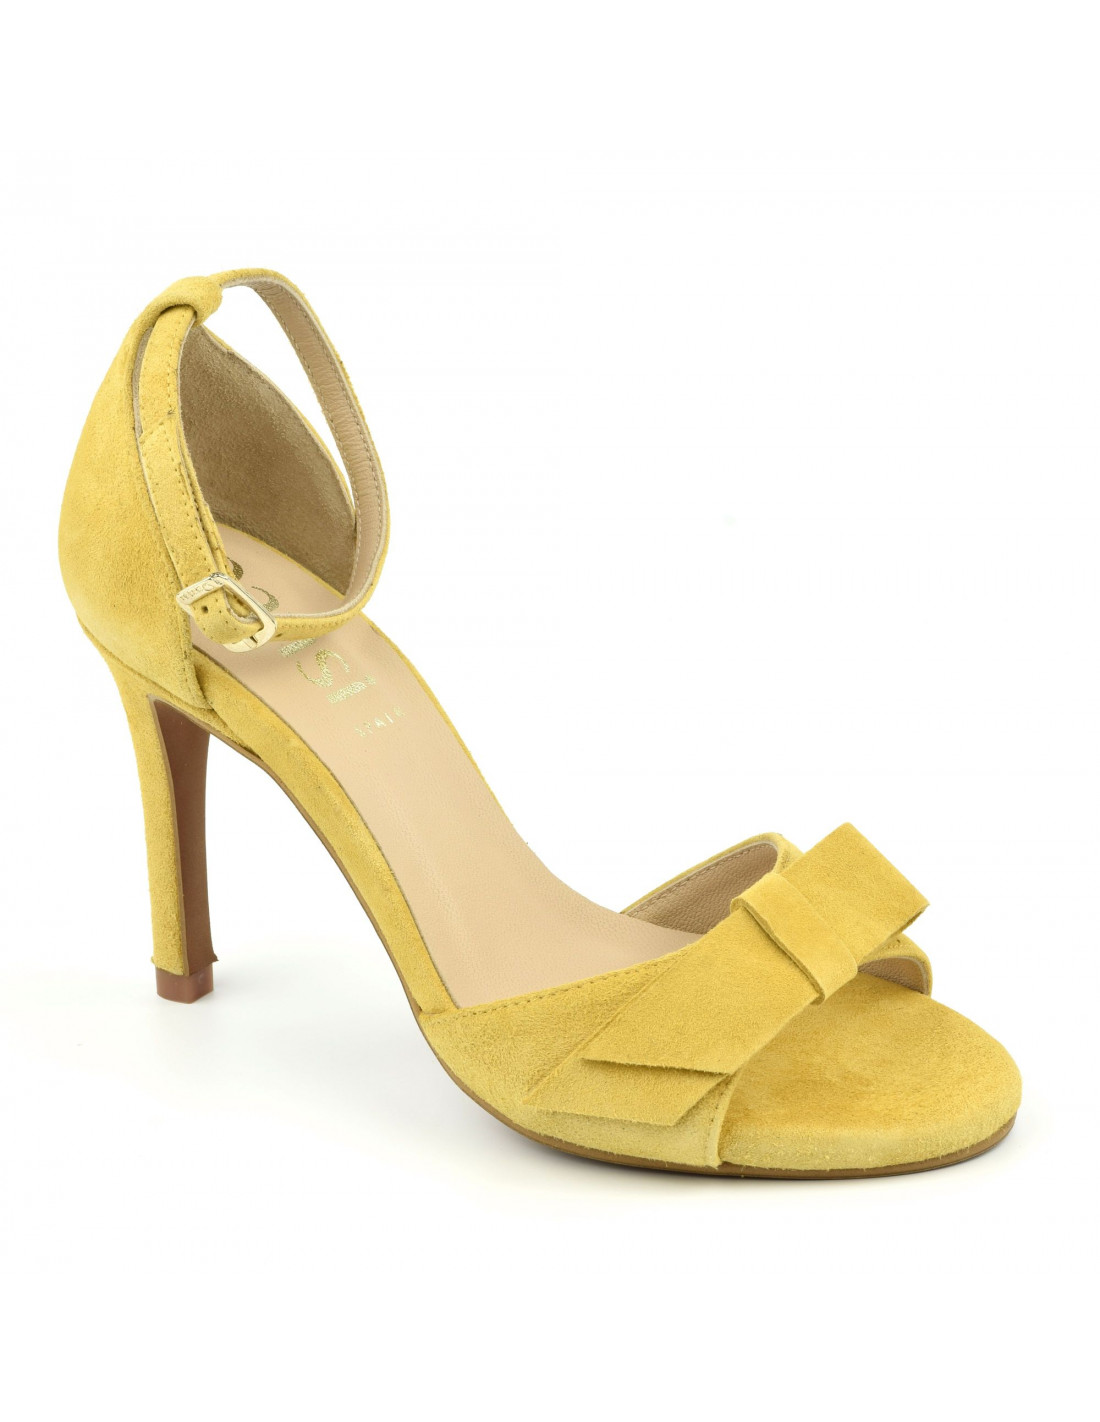 Buy Mustard Yellow Heeled Sandals for Women by AJIO Online | Ajio.com